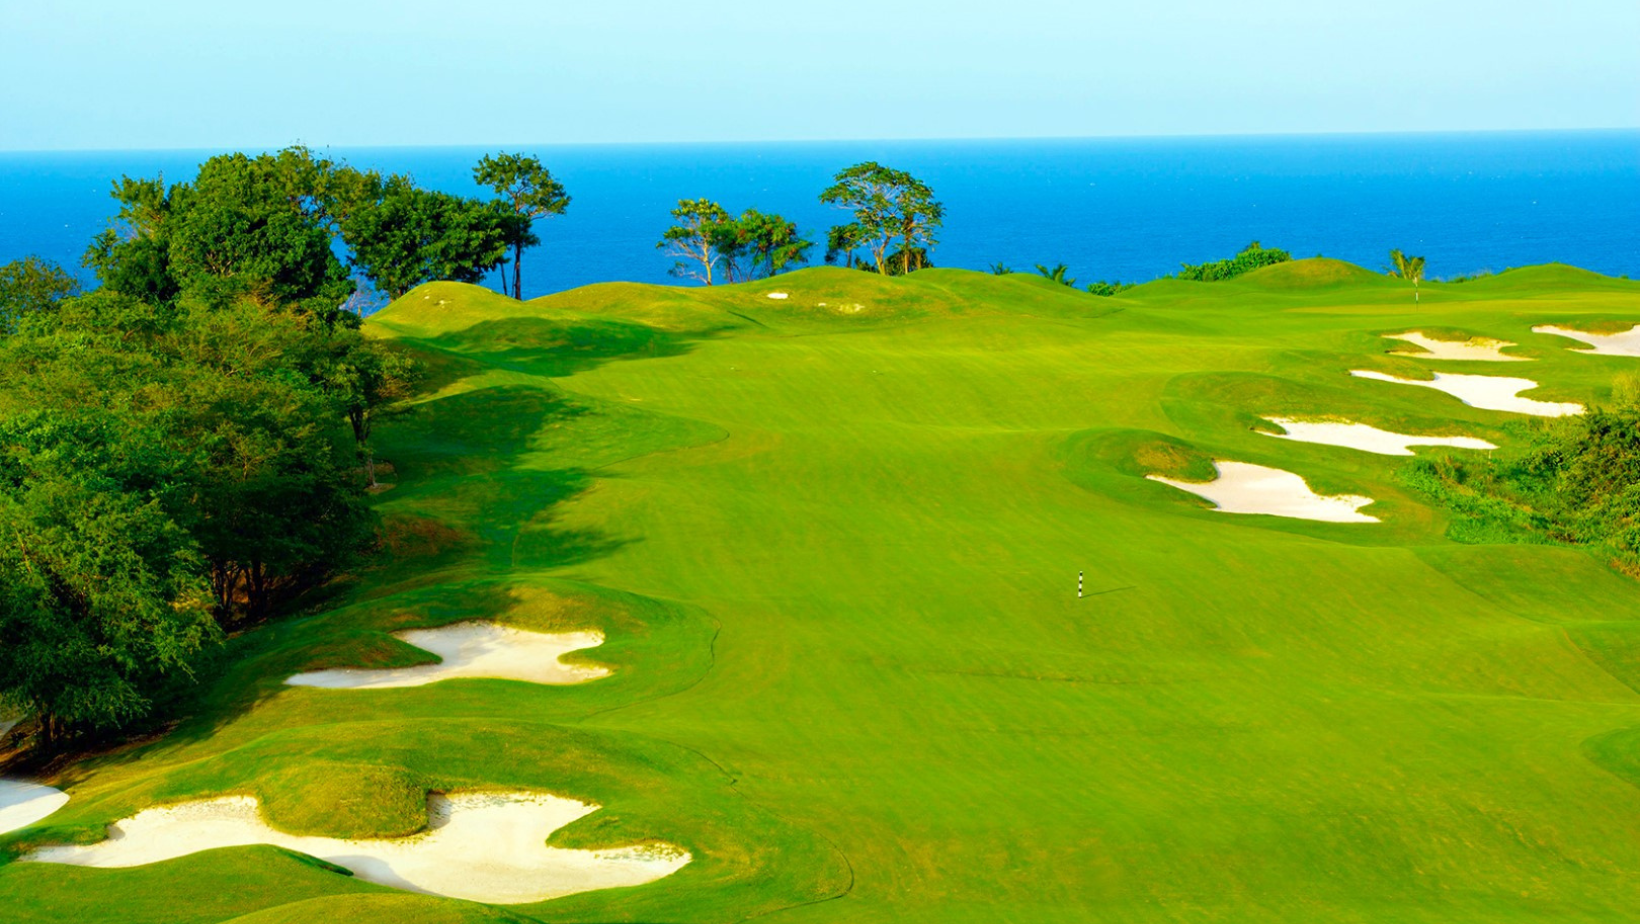 Montego bay golf course scenery  Ratepunk